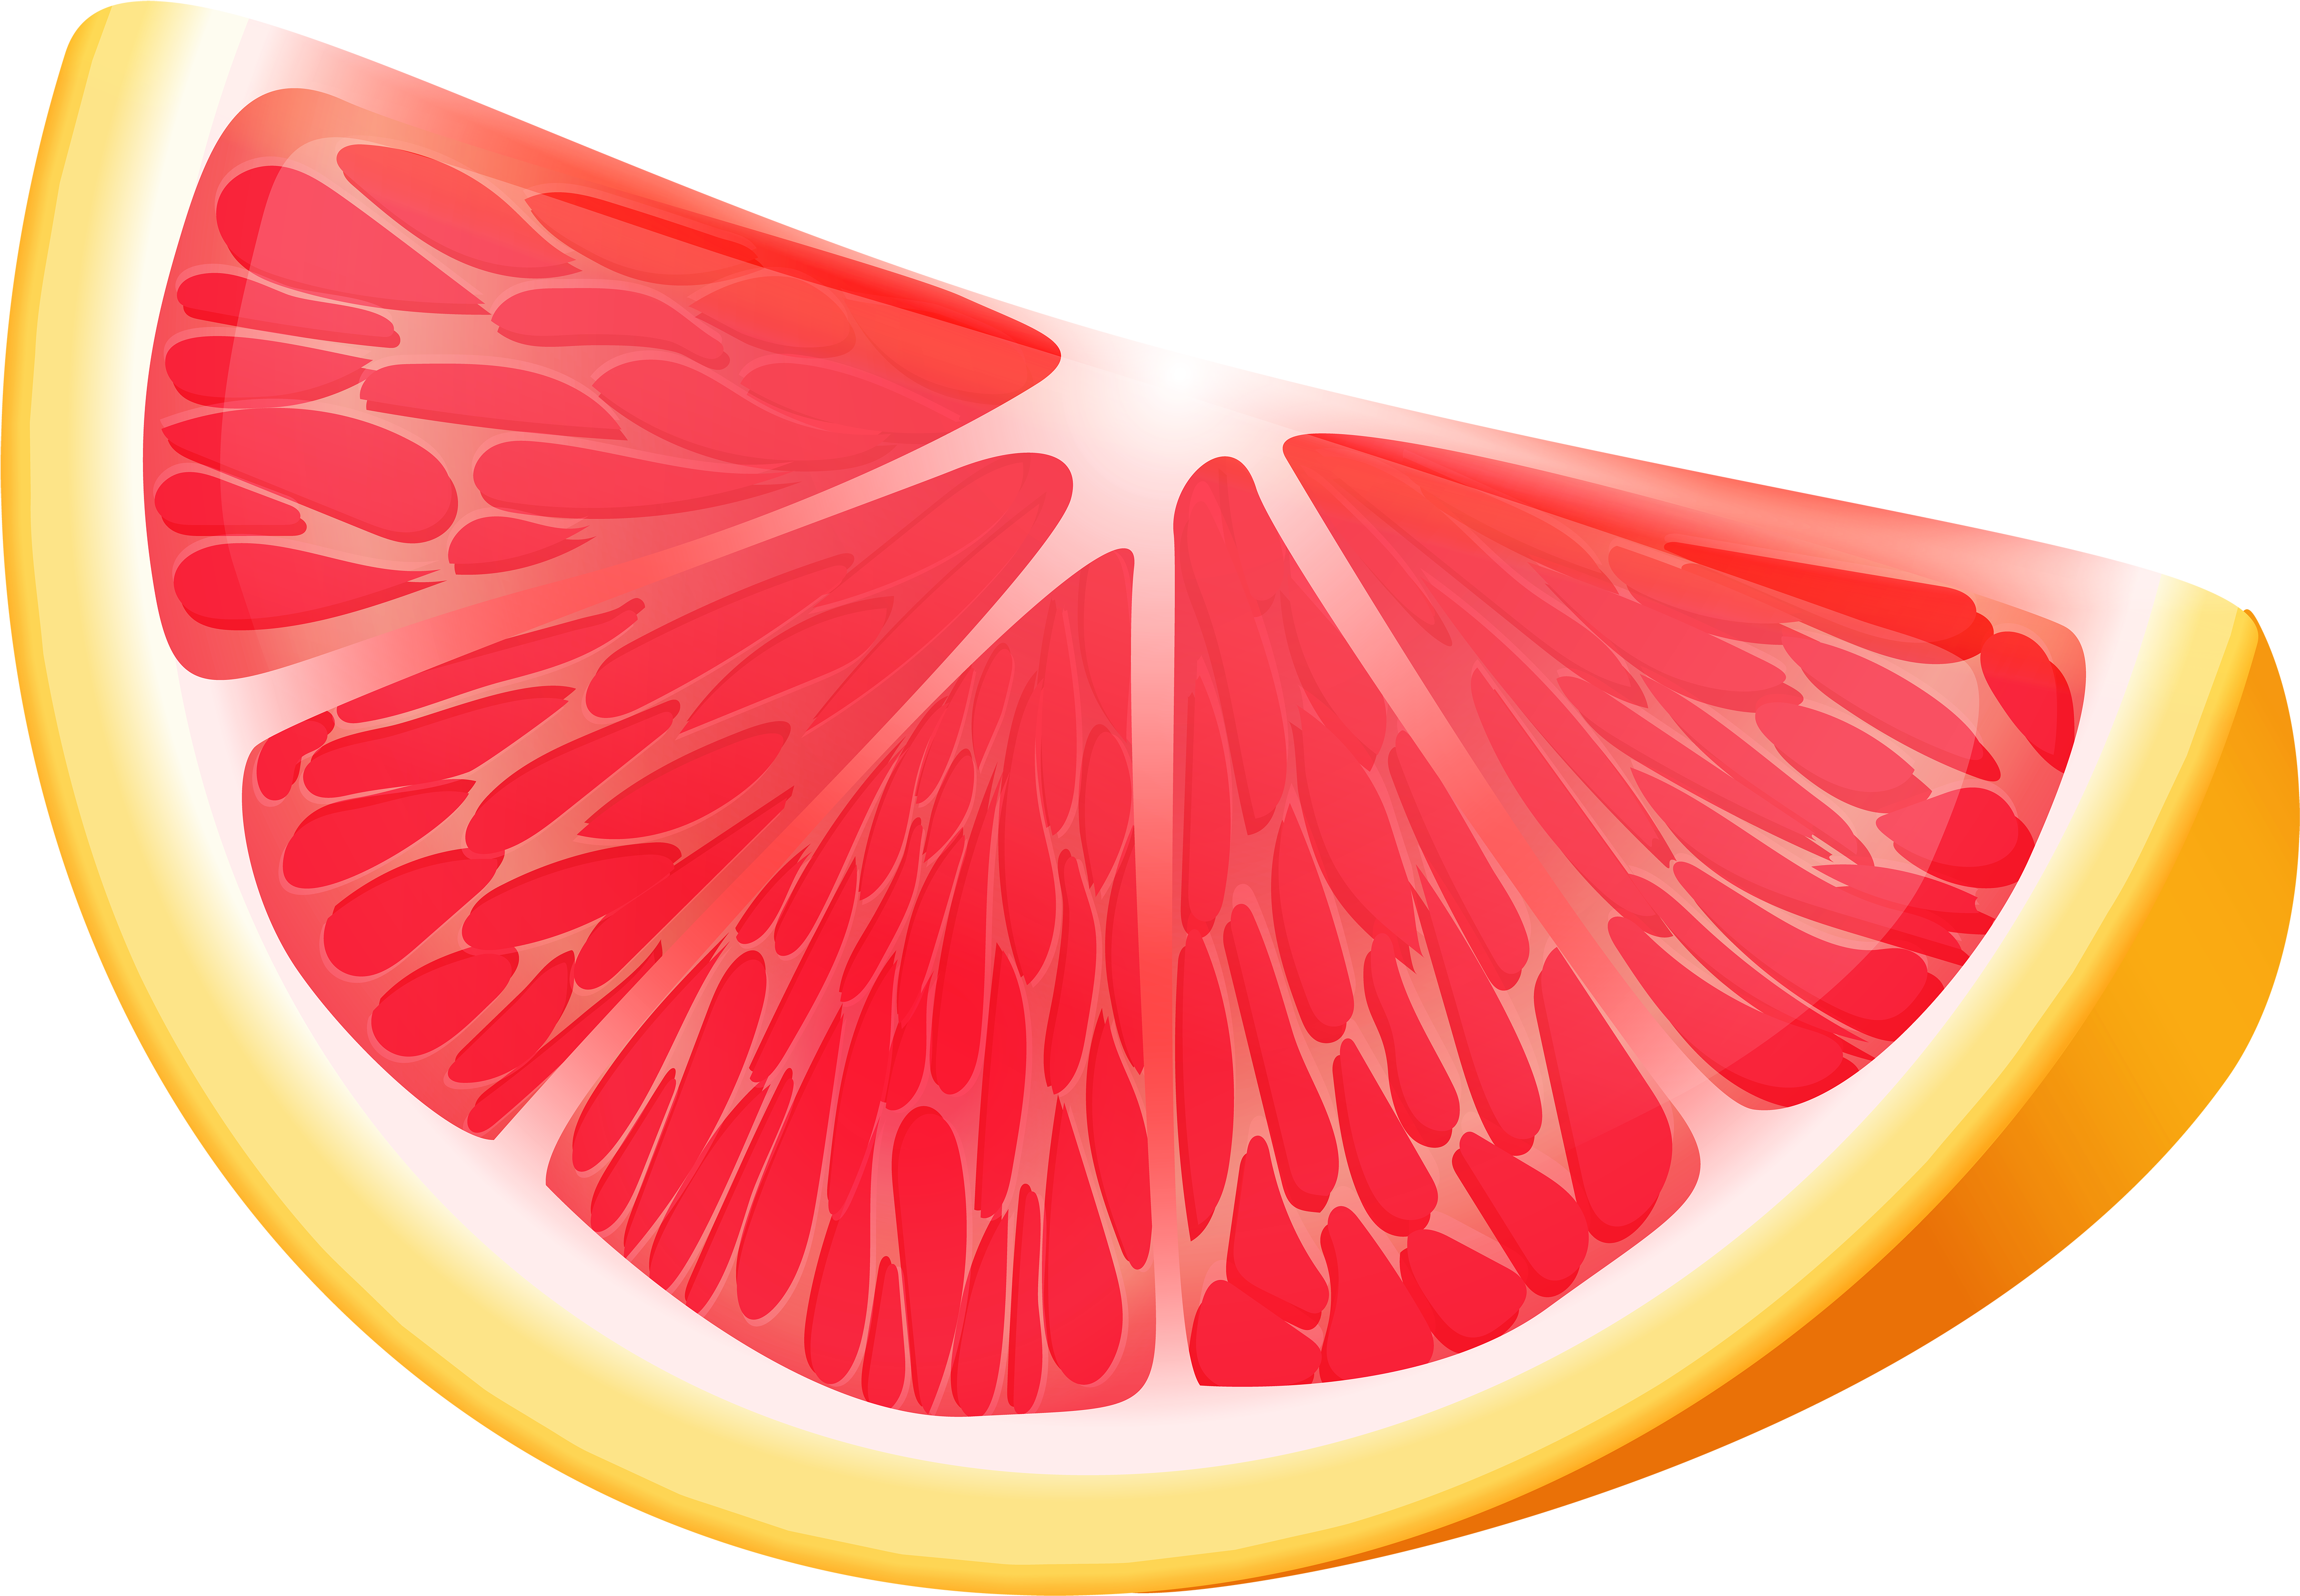 Grapefruit, Lemon, Lime And Orange Slices - Grapefruit Clipart Png (5000x3464)